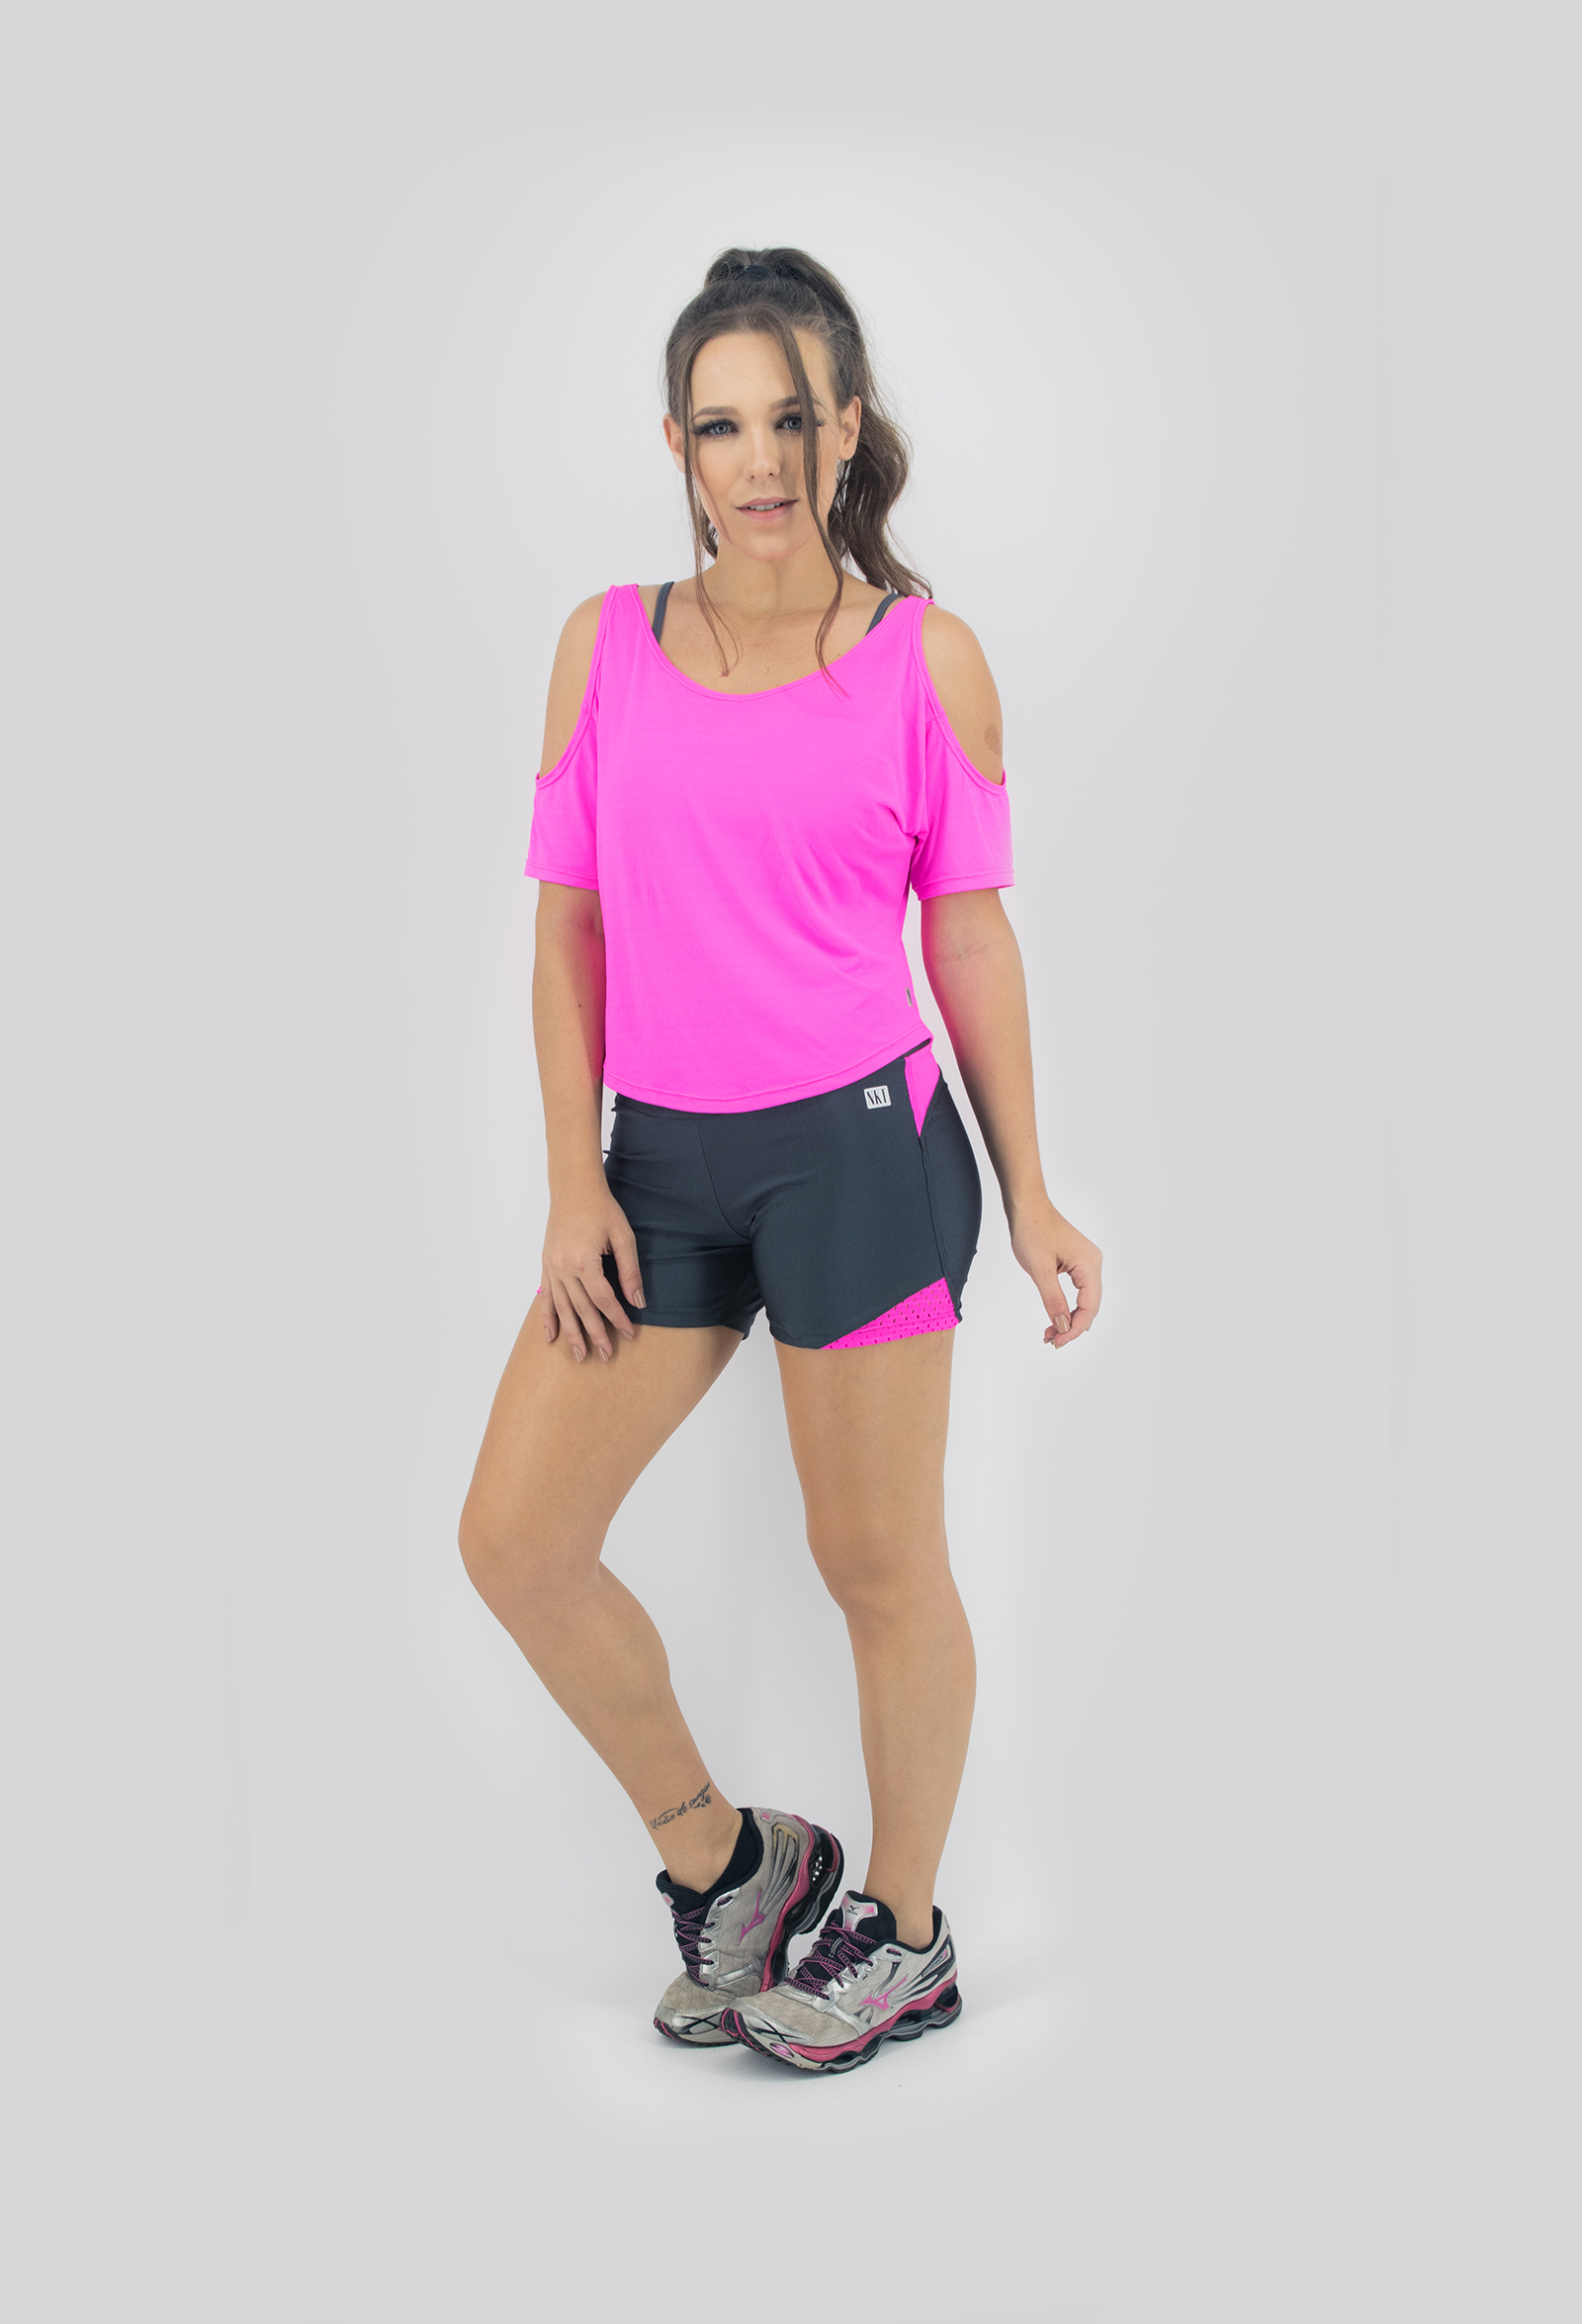 Blusa Like Pink, Coleção Move Your Body - NKT Fitwear Moda Fitness